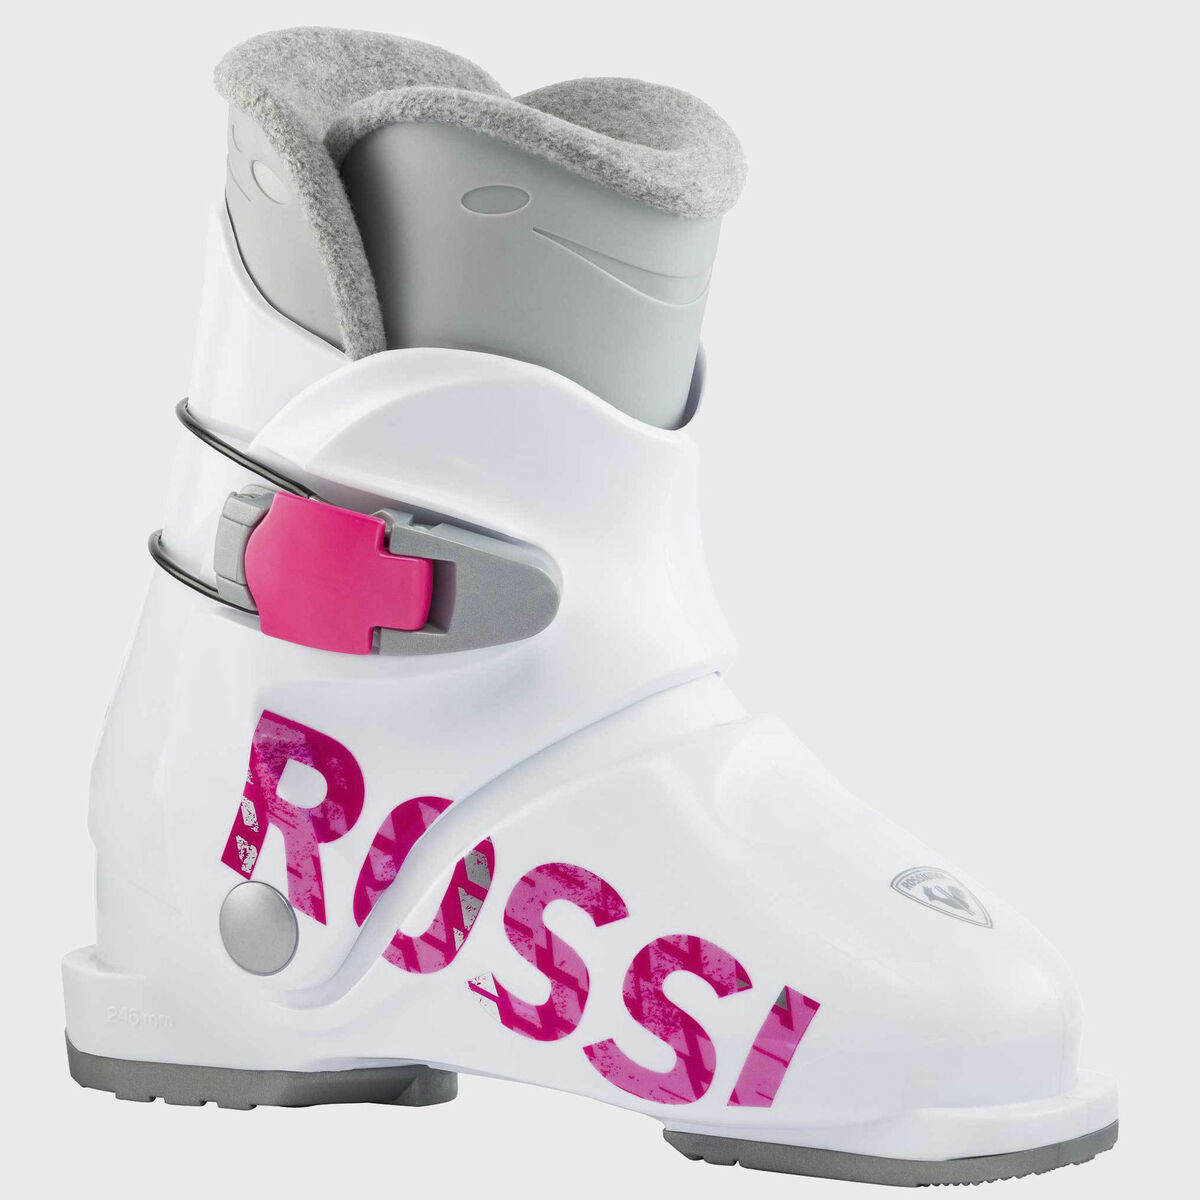 Kid's On Piste Ski Boots Fun Girl Junior 1